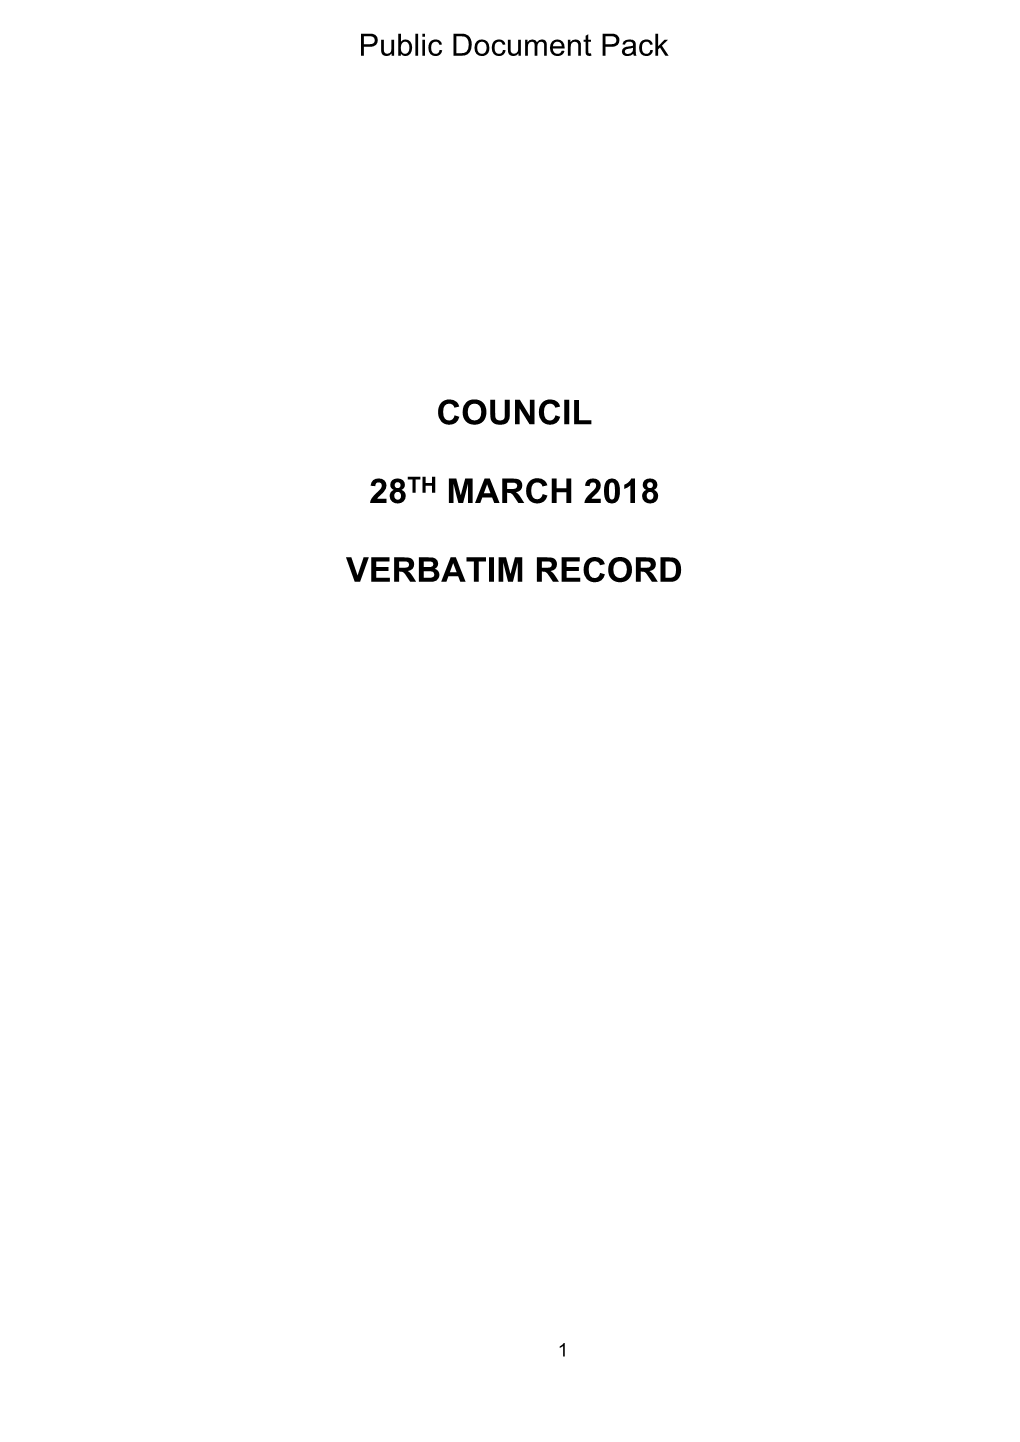 Verbatim Record Agenda Supplement for Council, 28/03/2018 13:00